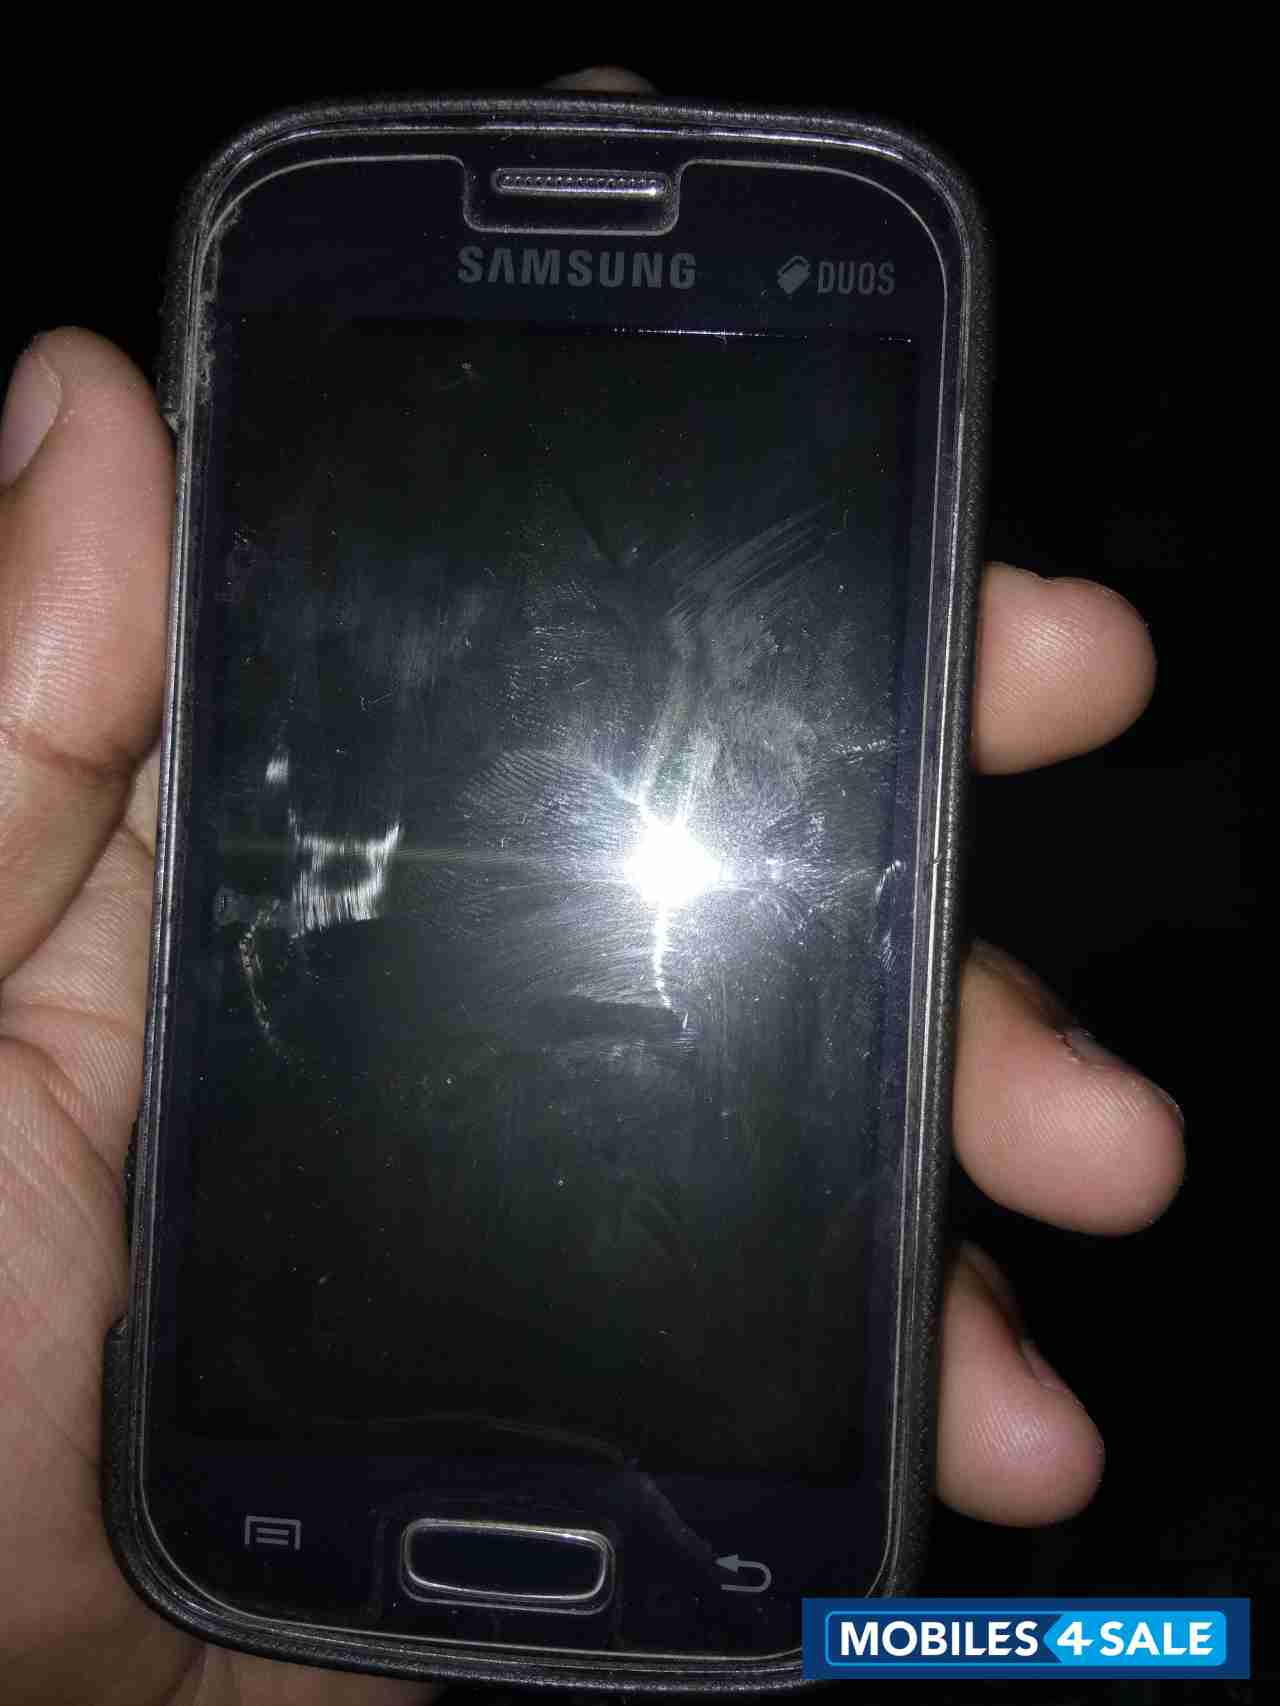 Black Samsung Galaxy Star Pro Duos S7262